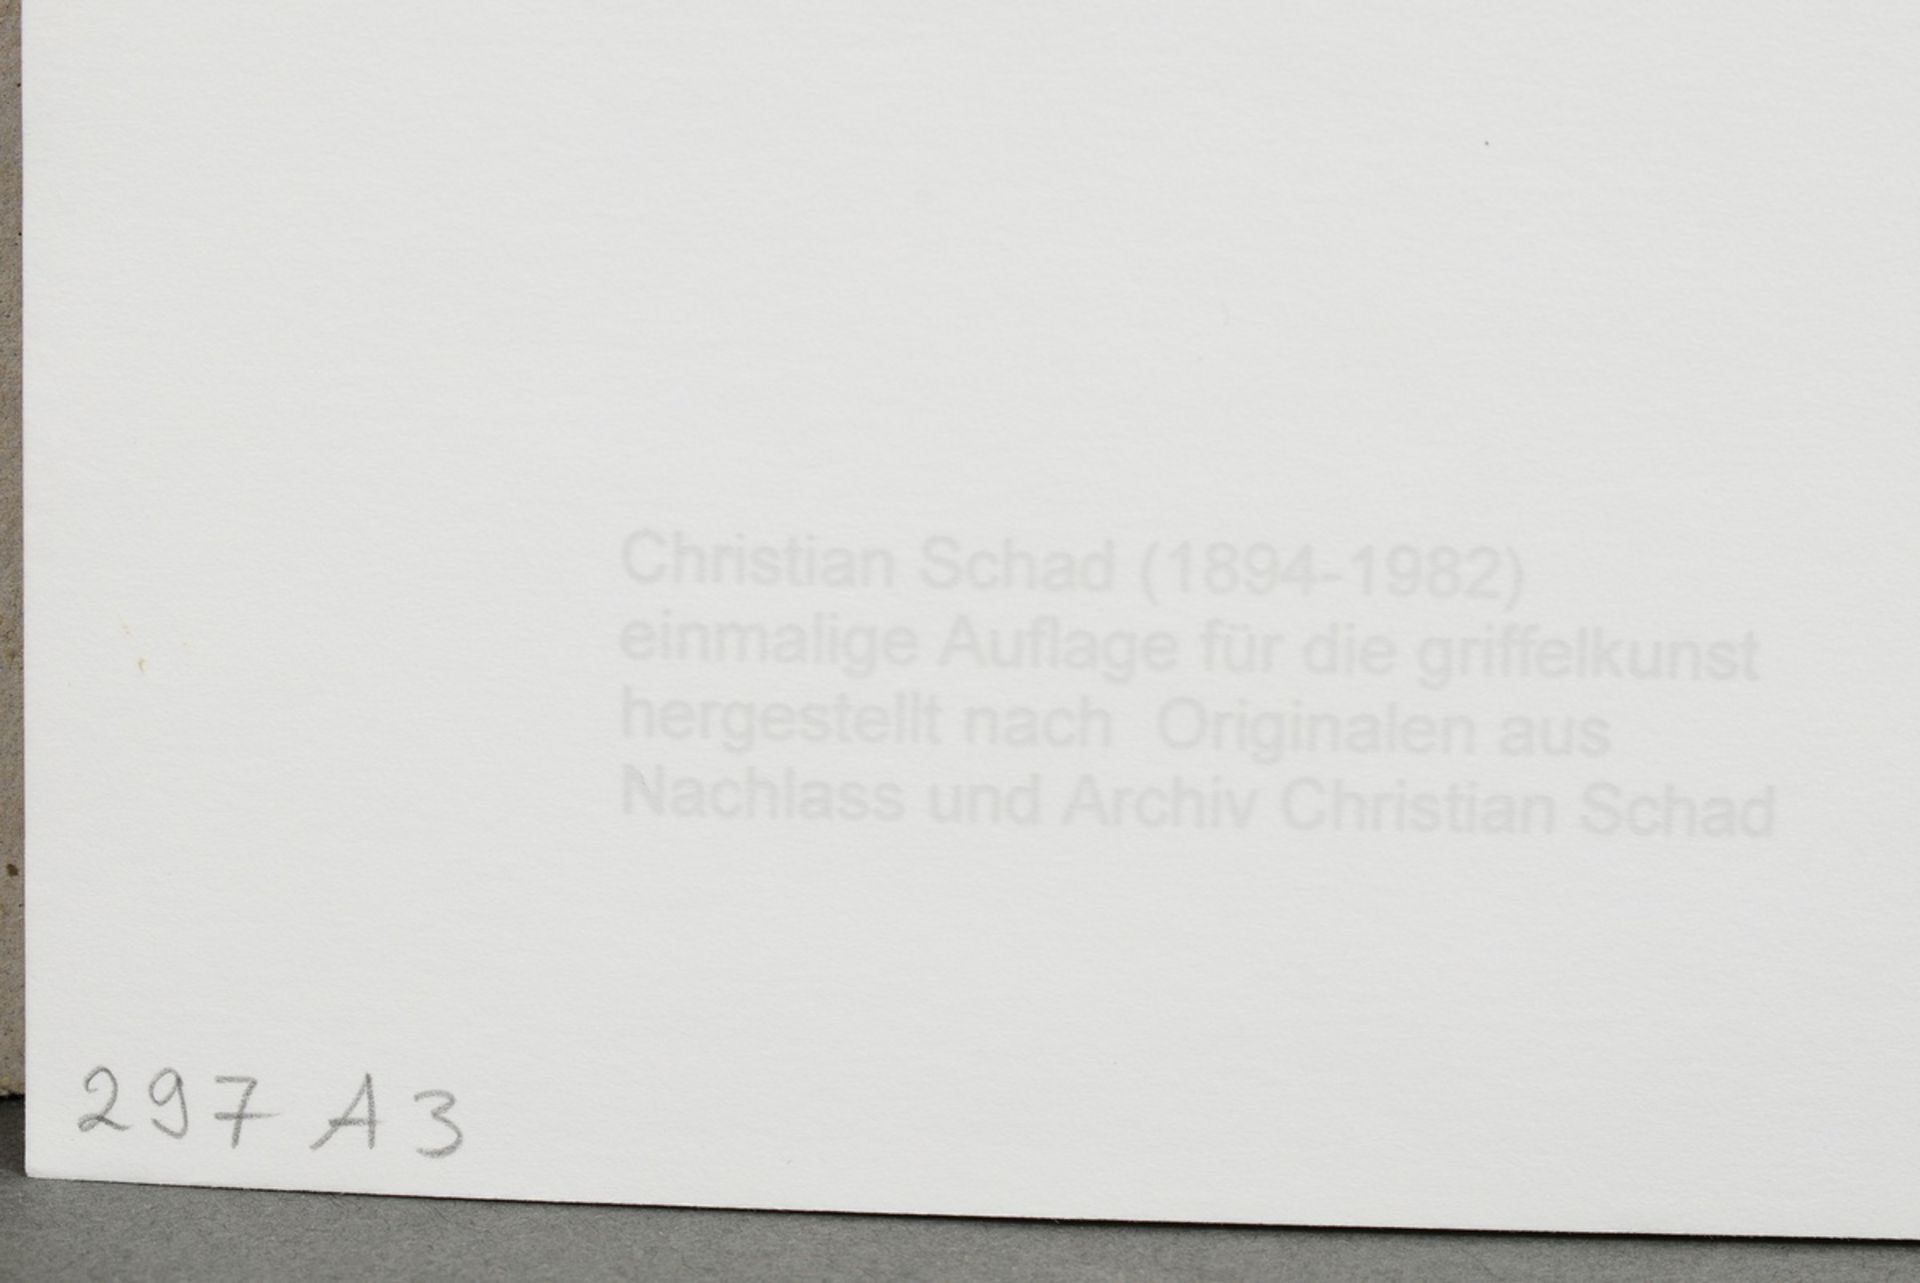 Schad, Christian (1894-1982) "Schadographie 59" 1962/2000, Schadography/photogram, pencil art, esta - Image 2 of 3